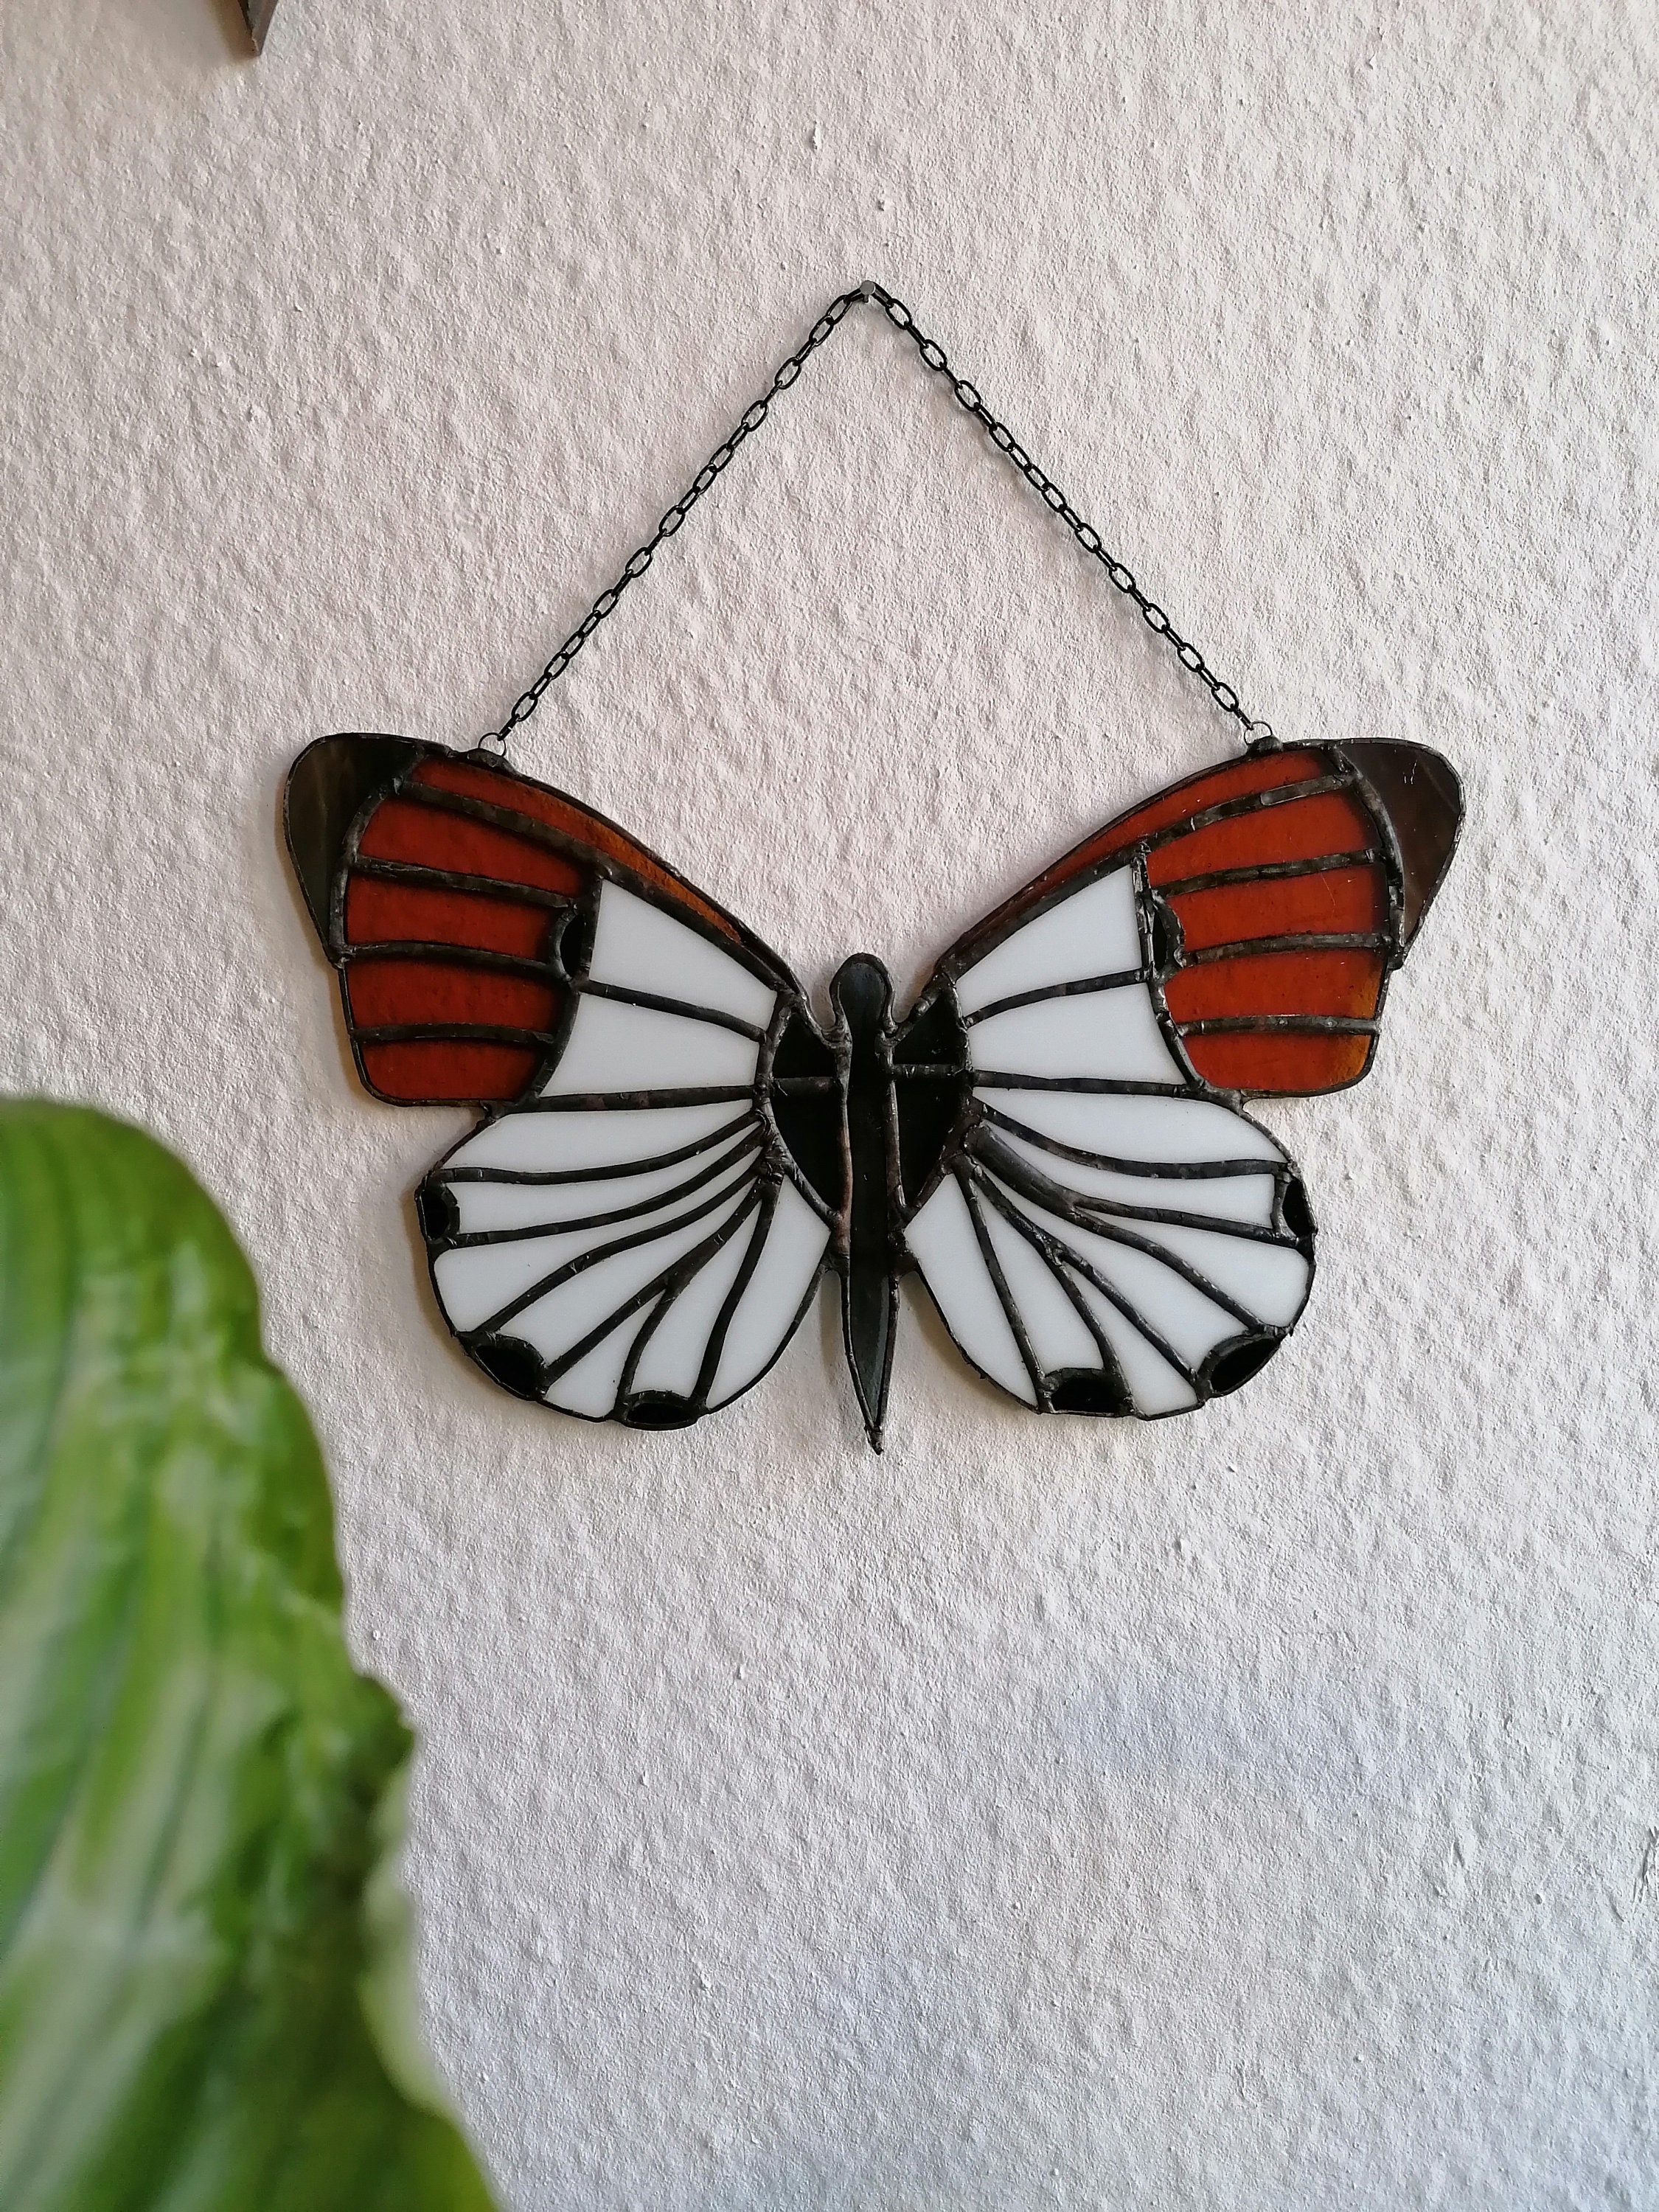 Schmetterlinge fensterbilder - .de